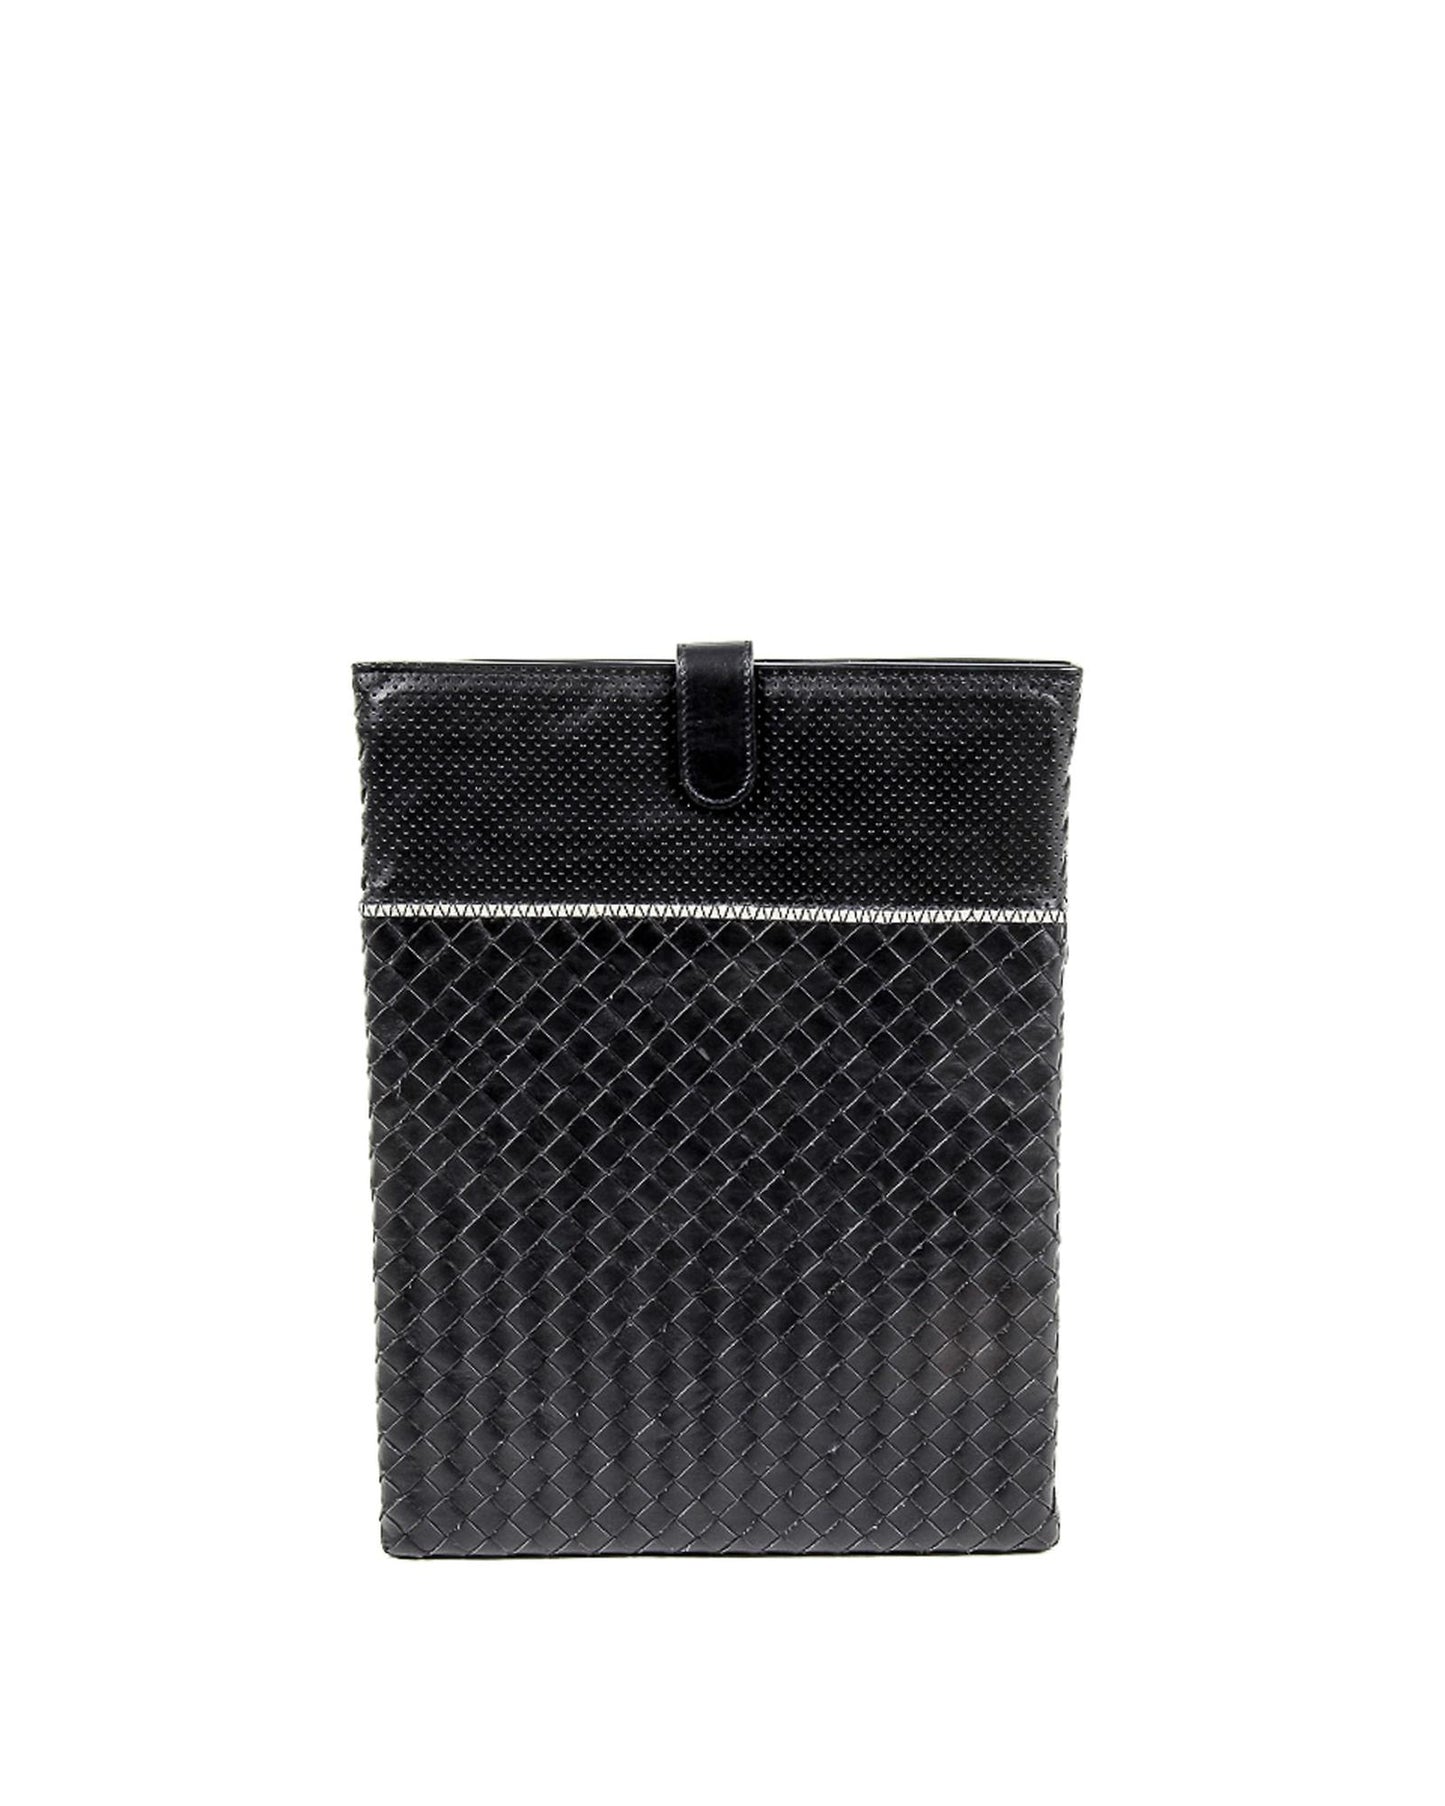 Bottega Veneta Unisex Leather Tablet Cover in Black